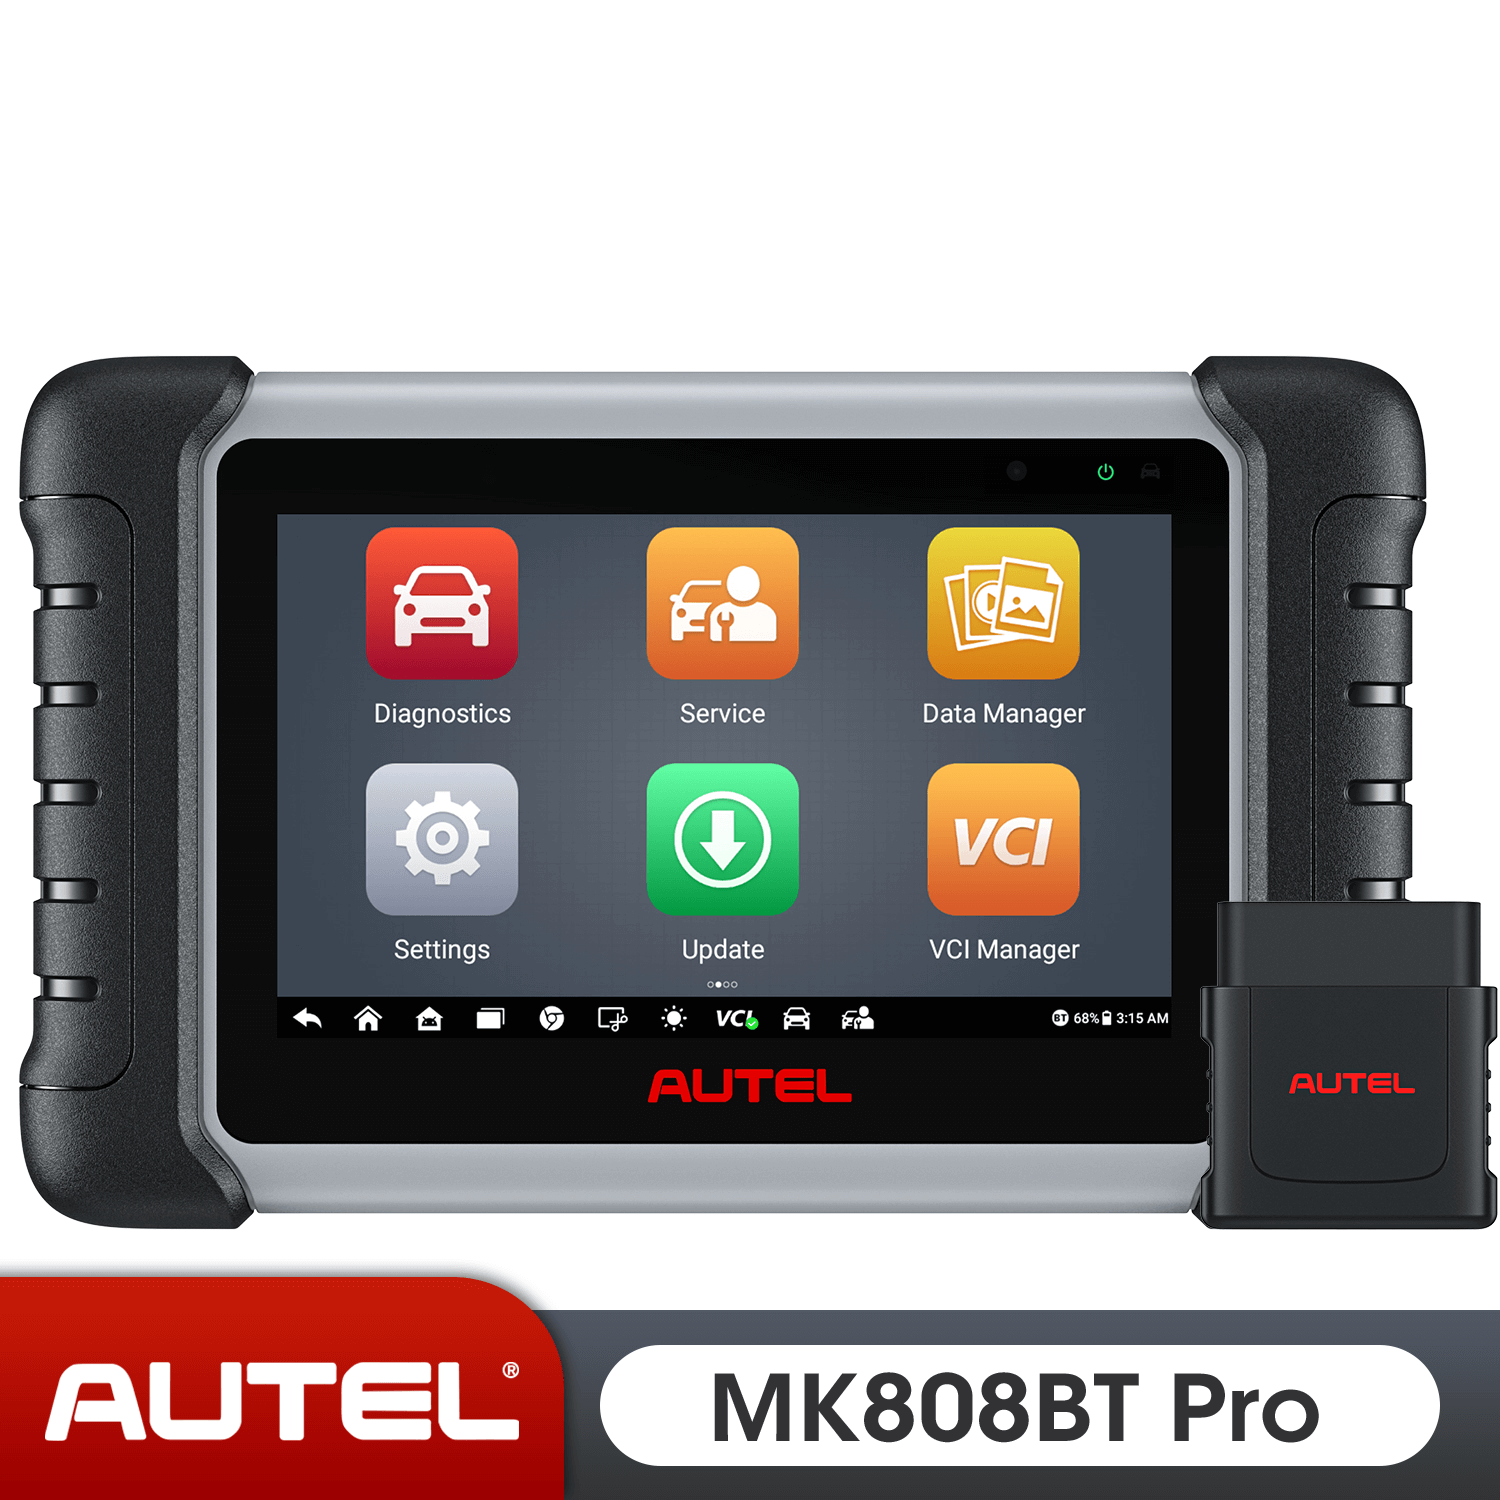 Product of Autel MaxiCOM MK808BT Pro